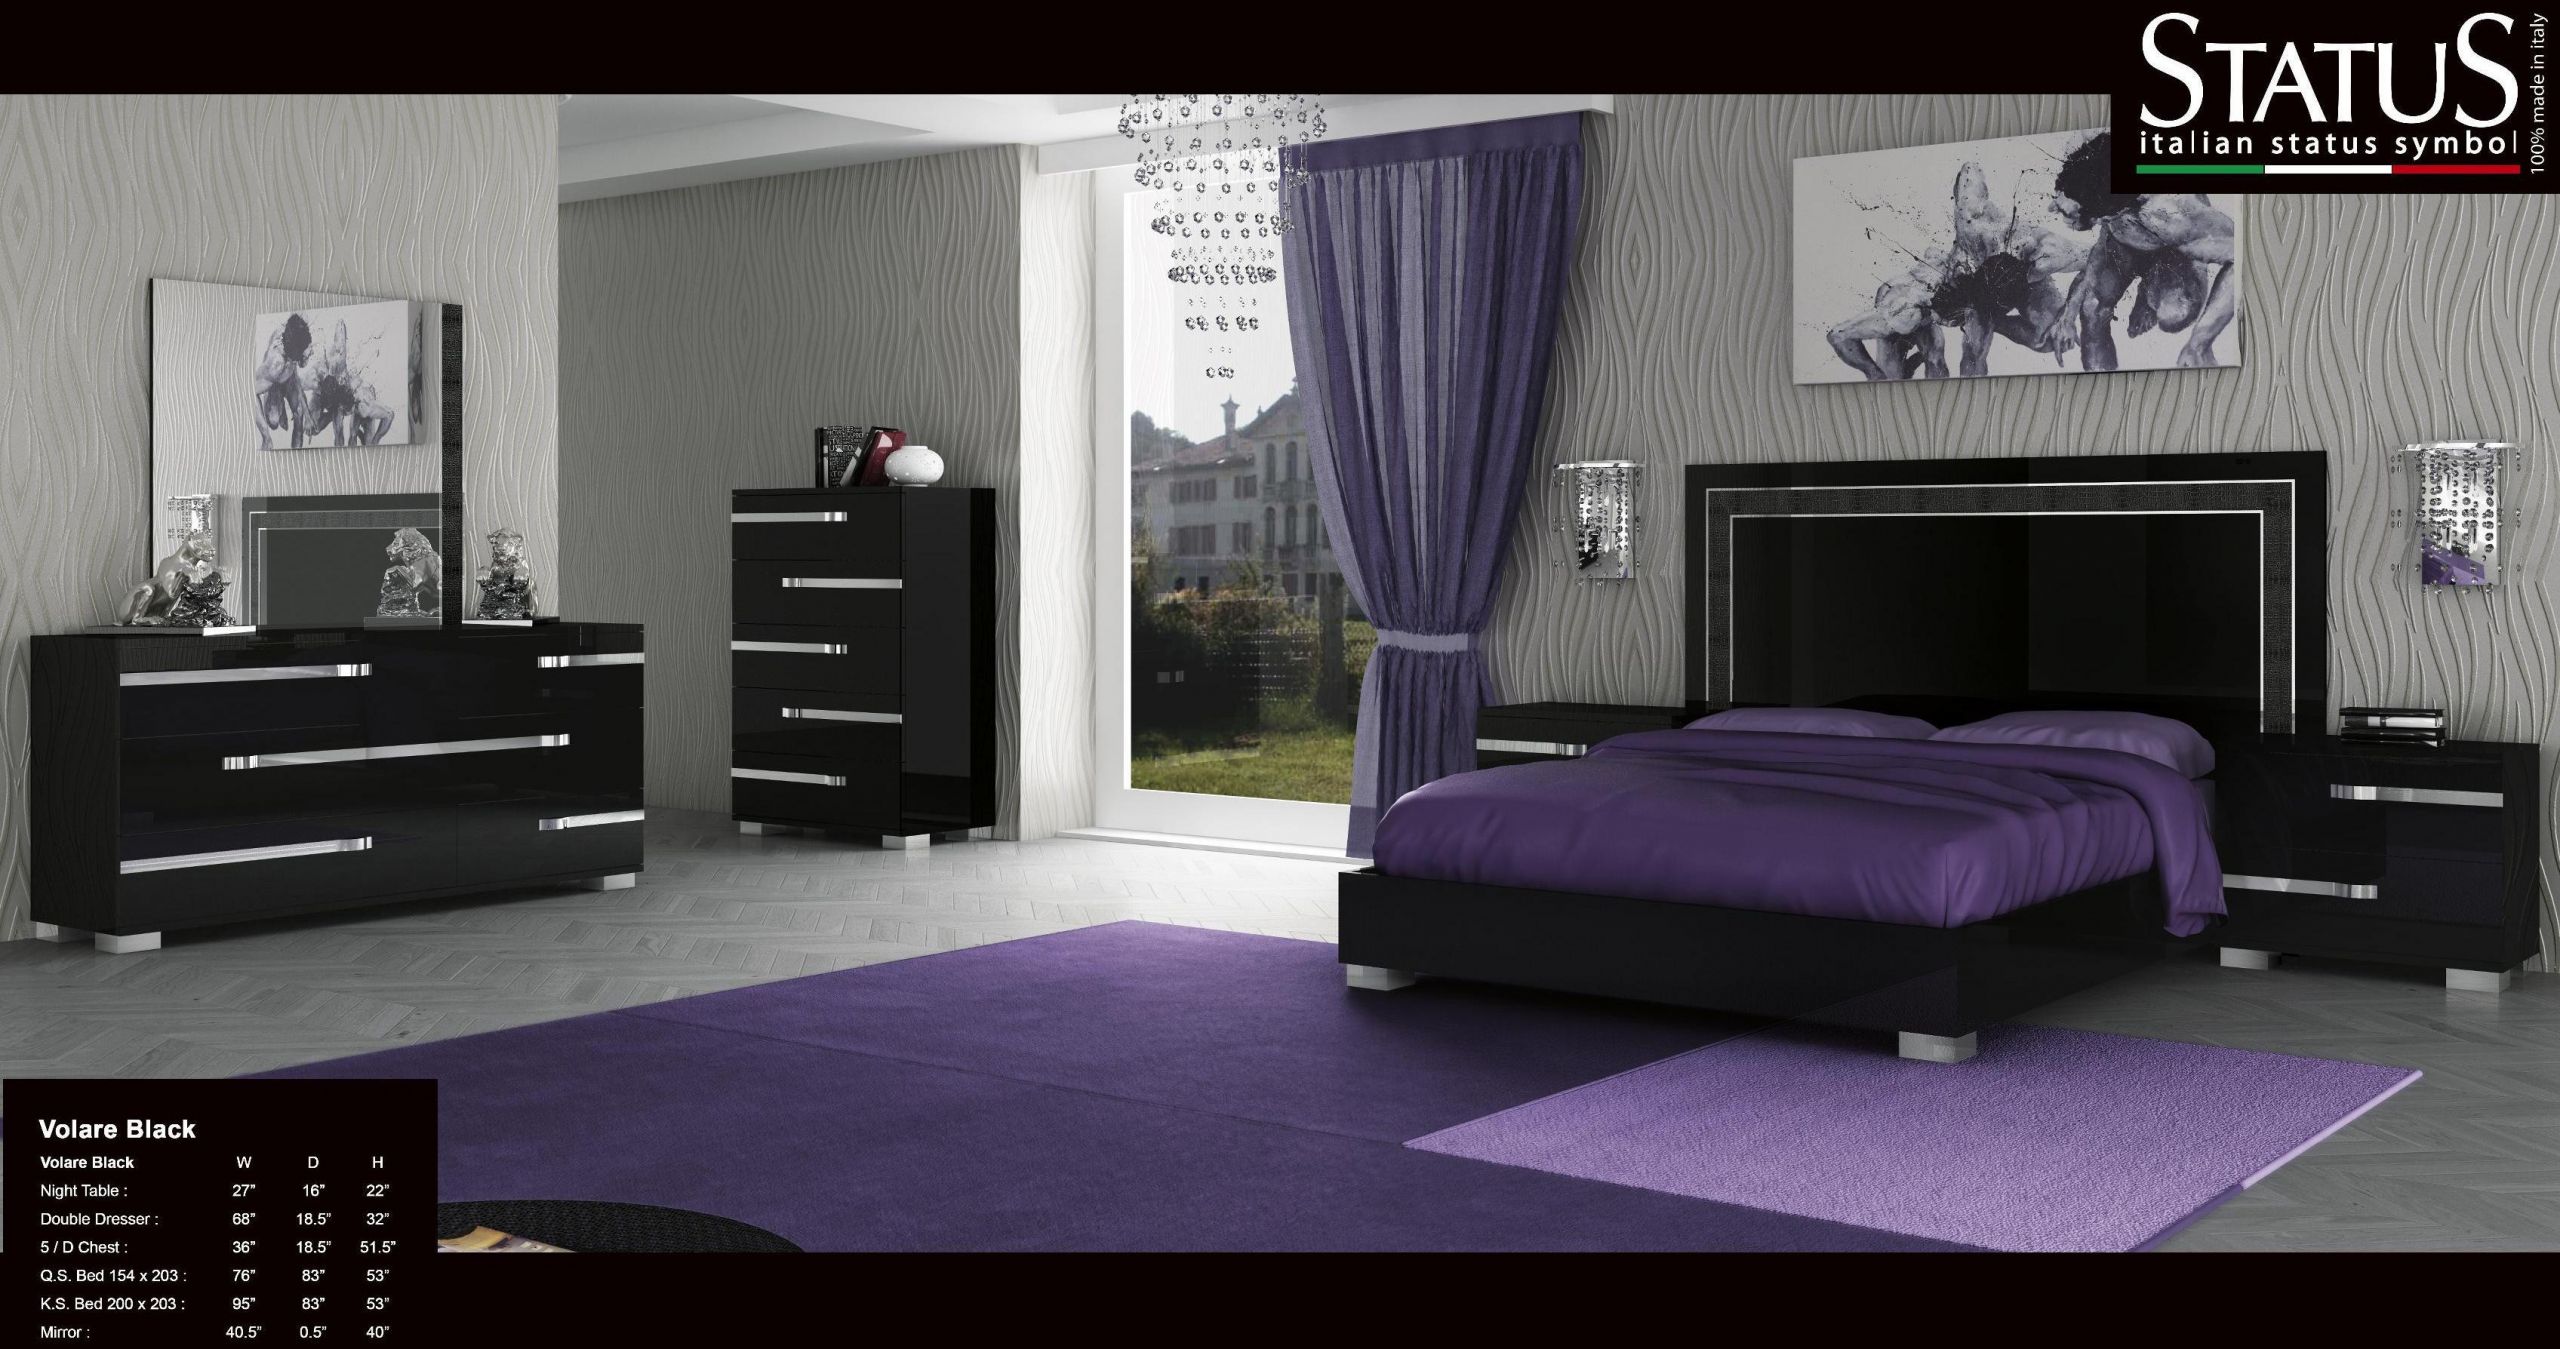 Modern King Size Bedroom Sets
 VOLARE KING SIZE MODERN BLACK BEDROOM SET 5PC MADE IN